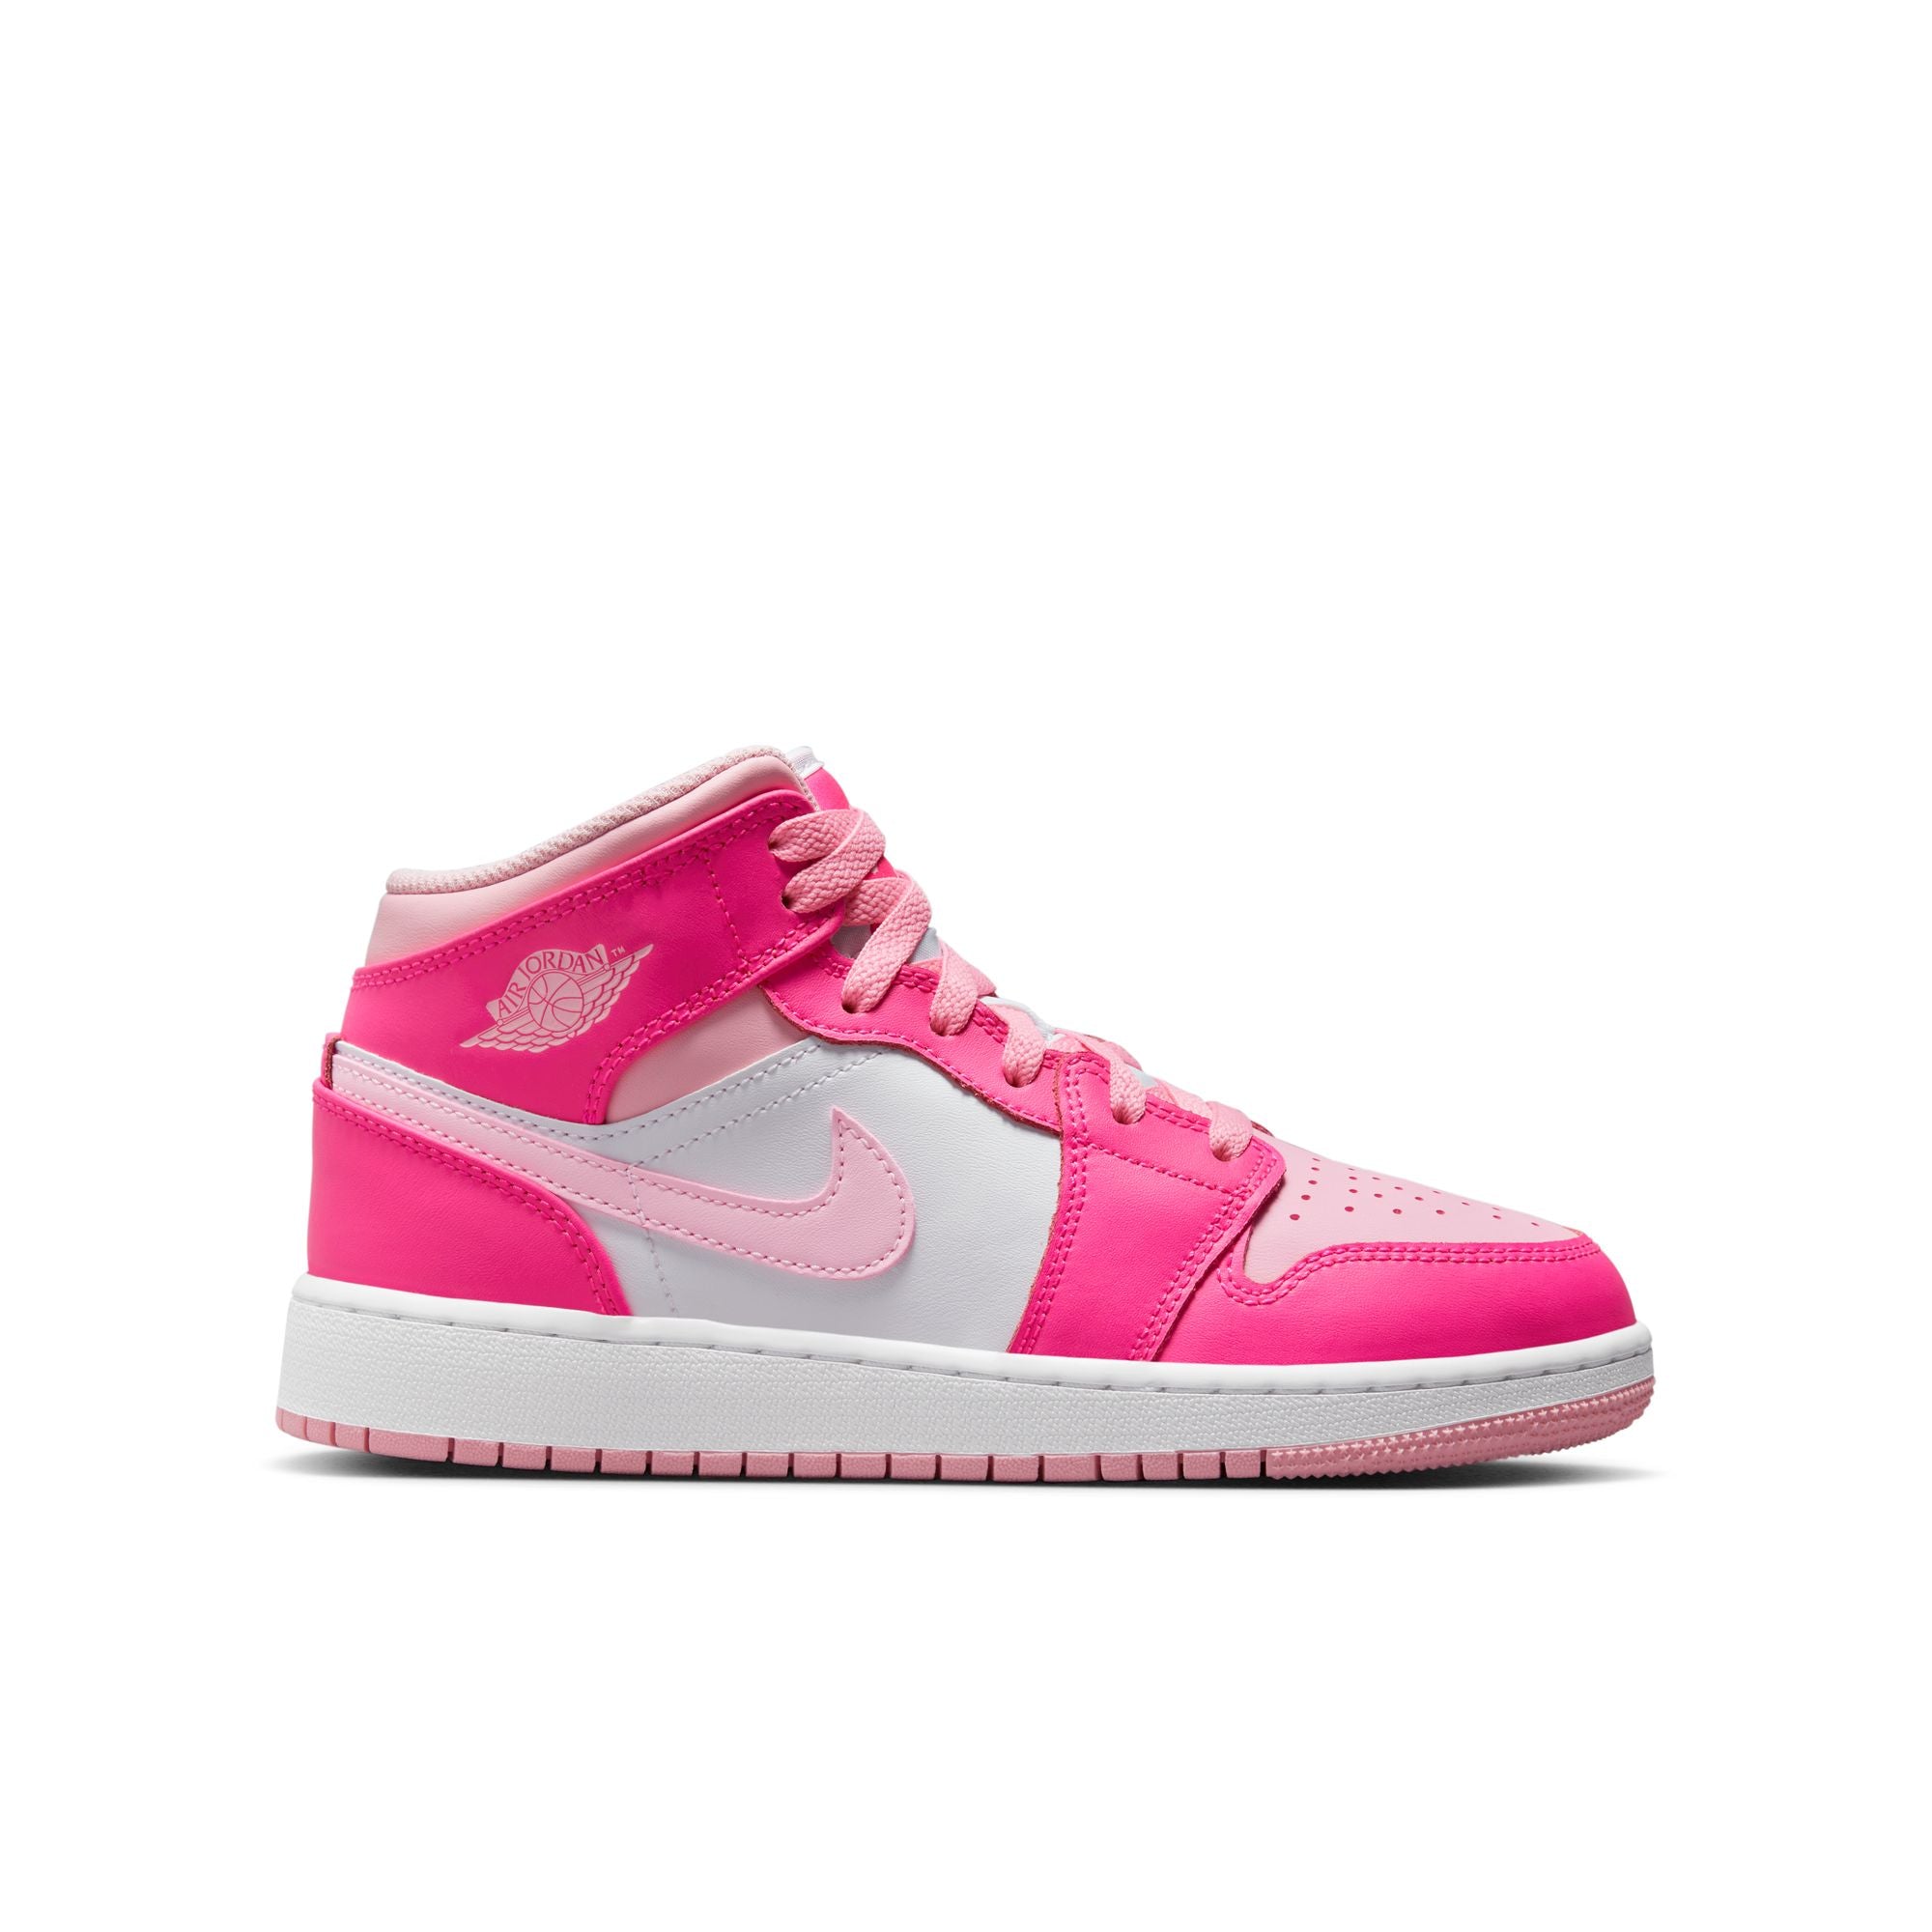 Nike Air Jordan 1 Mid GSMedium Soft Pink